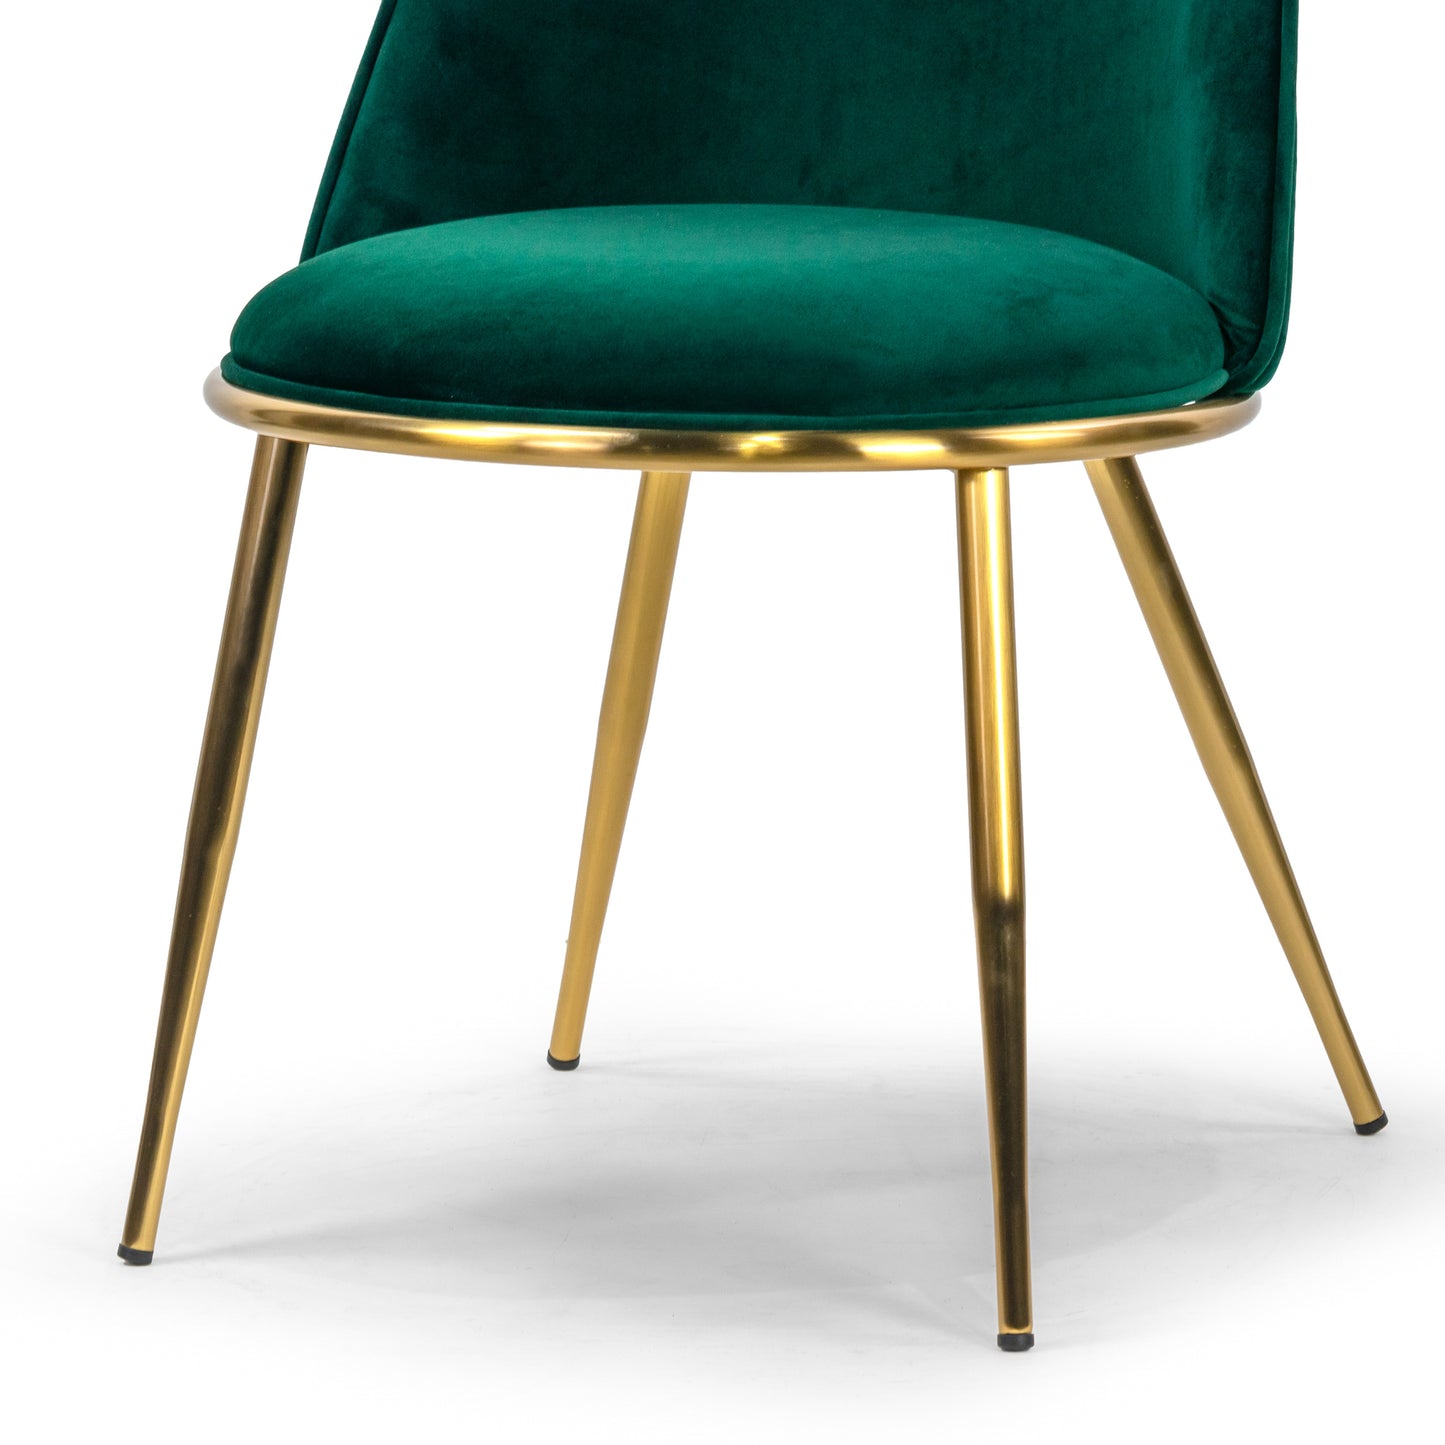 Set of 2 Anzu Green Velvet Dining Chair with Golden Metal Legs